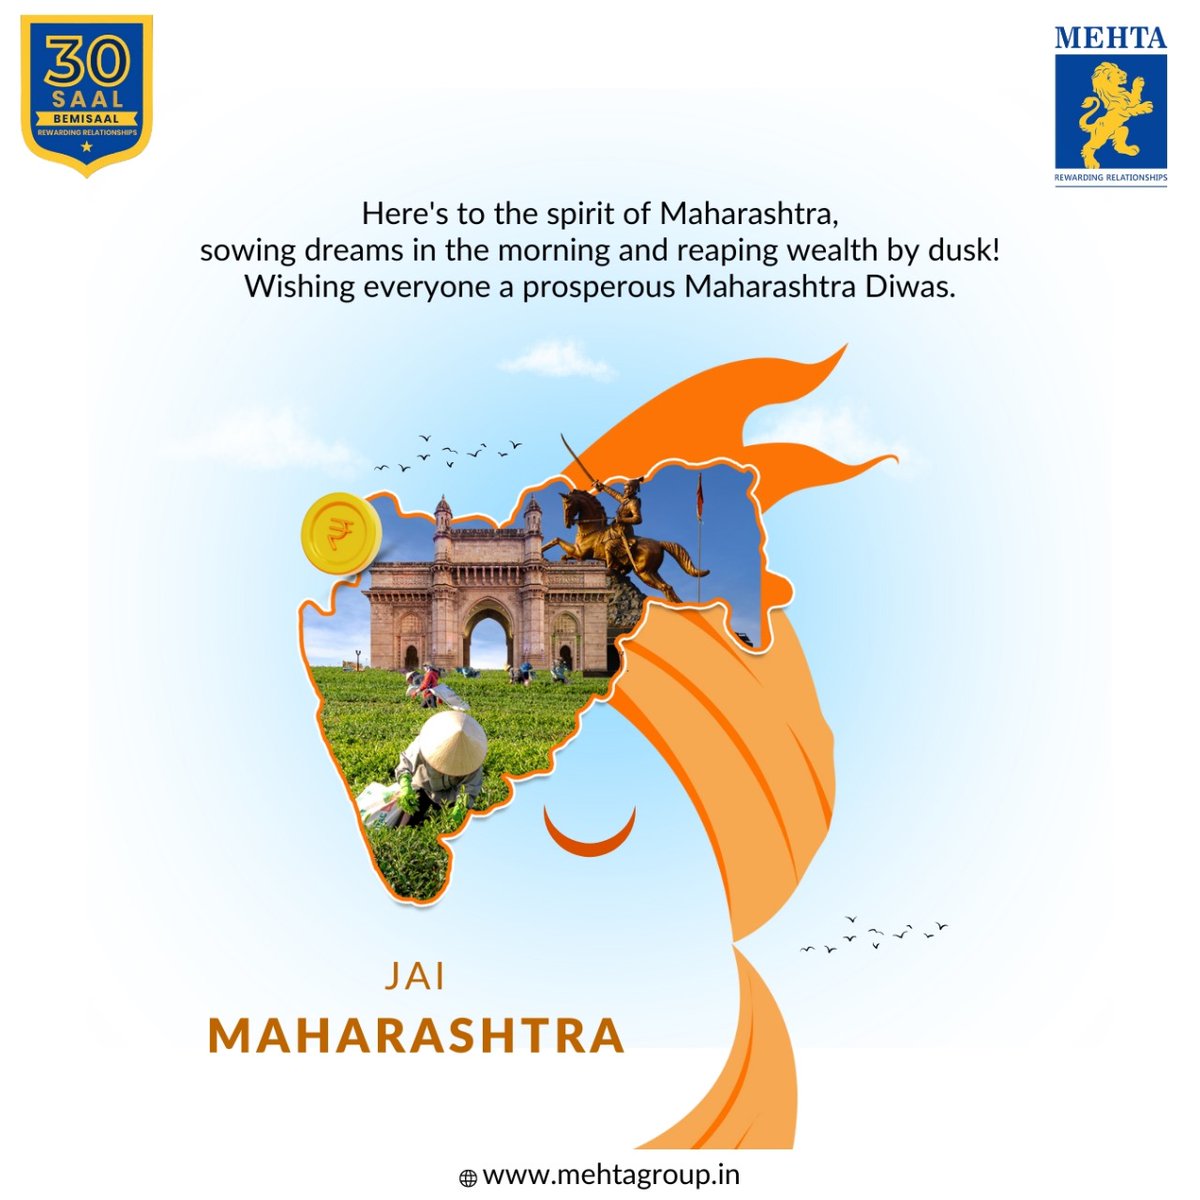 Team Mehta Equities Ltd. wishes you a Happy Maharashtra Diwas! 
.
.
#mehtaequities #investmentopportunities #maharashtradiwas #maharashtradiwas2024 #investmentstrategies #stockmarketinvesting #stocktrading #30saalbemisaal